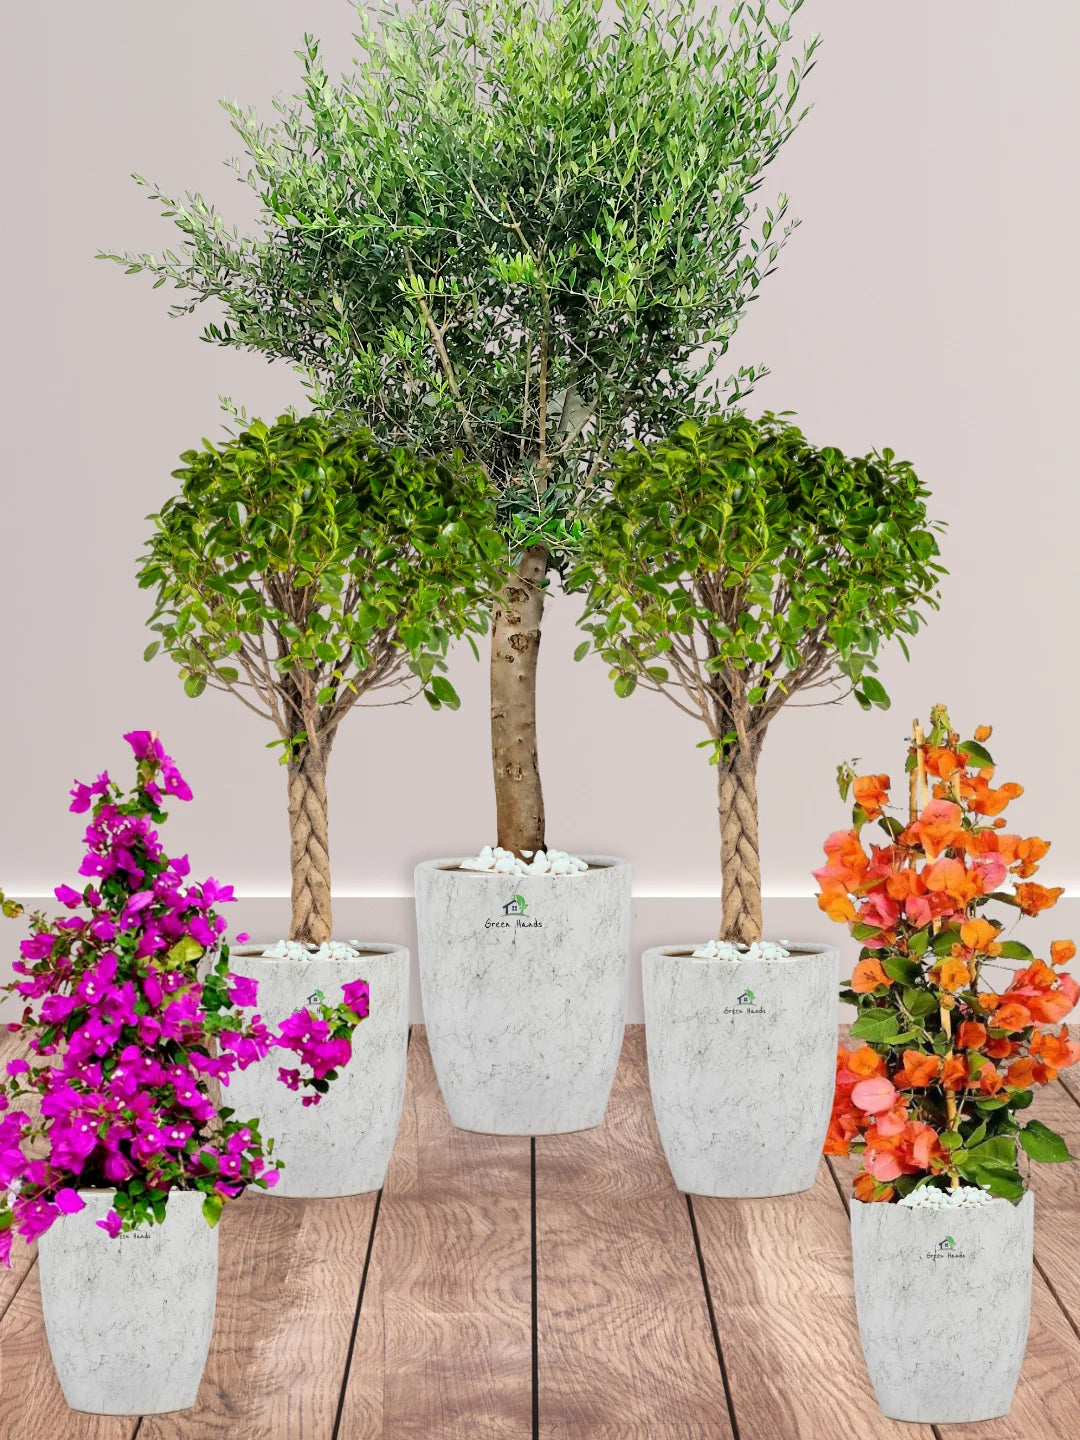 Premium Outdoor Patio Plant Bundle: 5 Potted Plants for Dubai & Abu Dhabi Homes/Offices